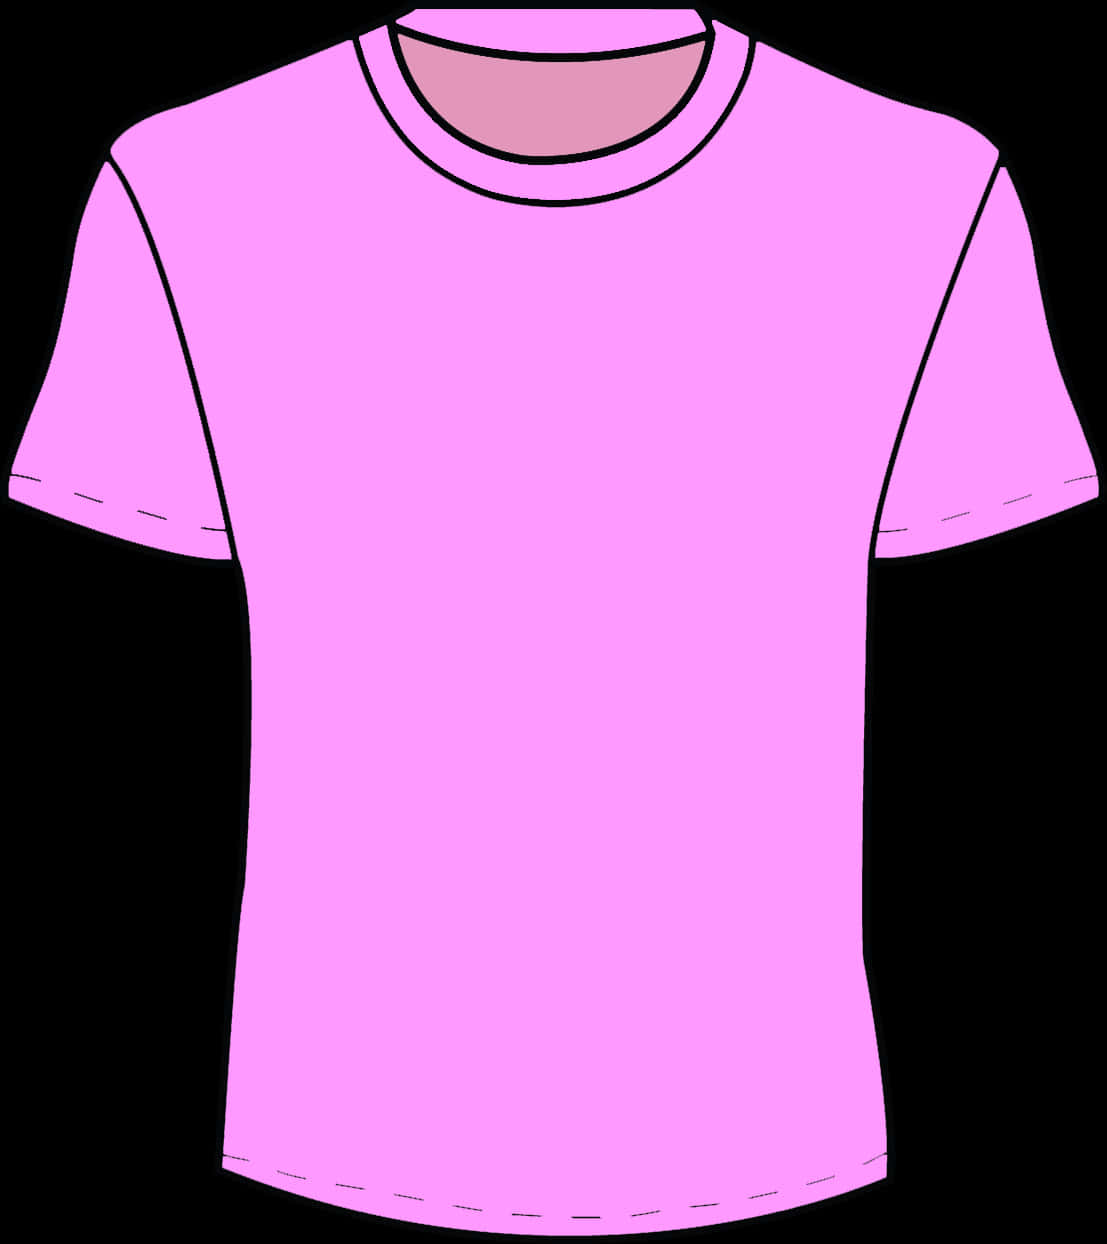 A Pink Shirt On A Swinger